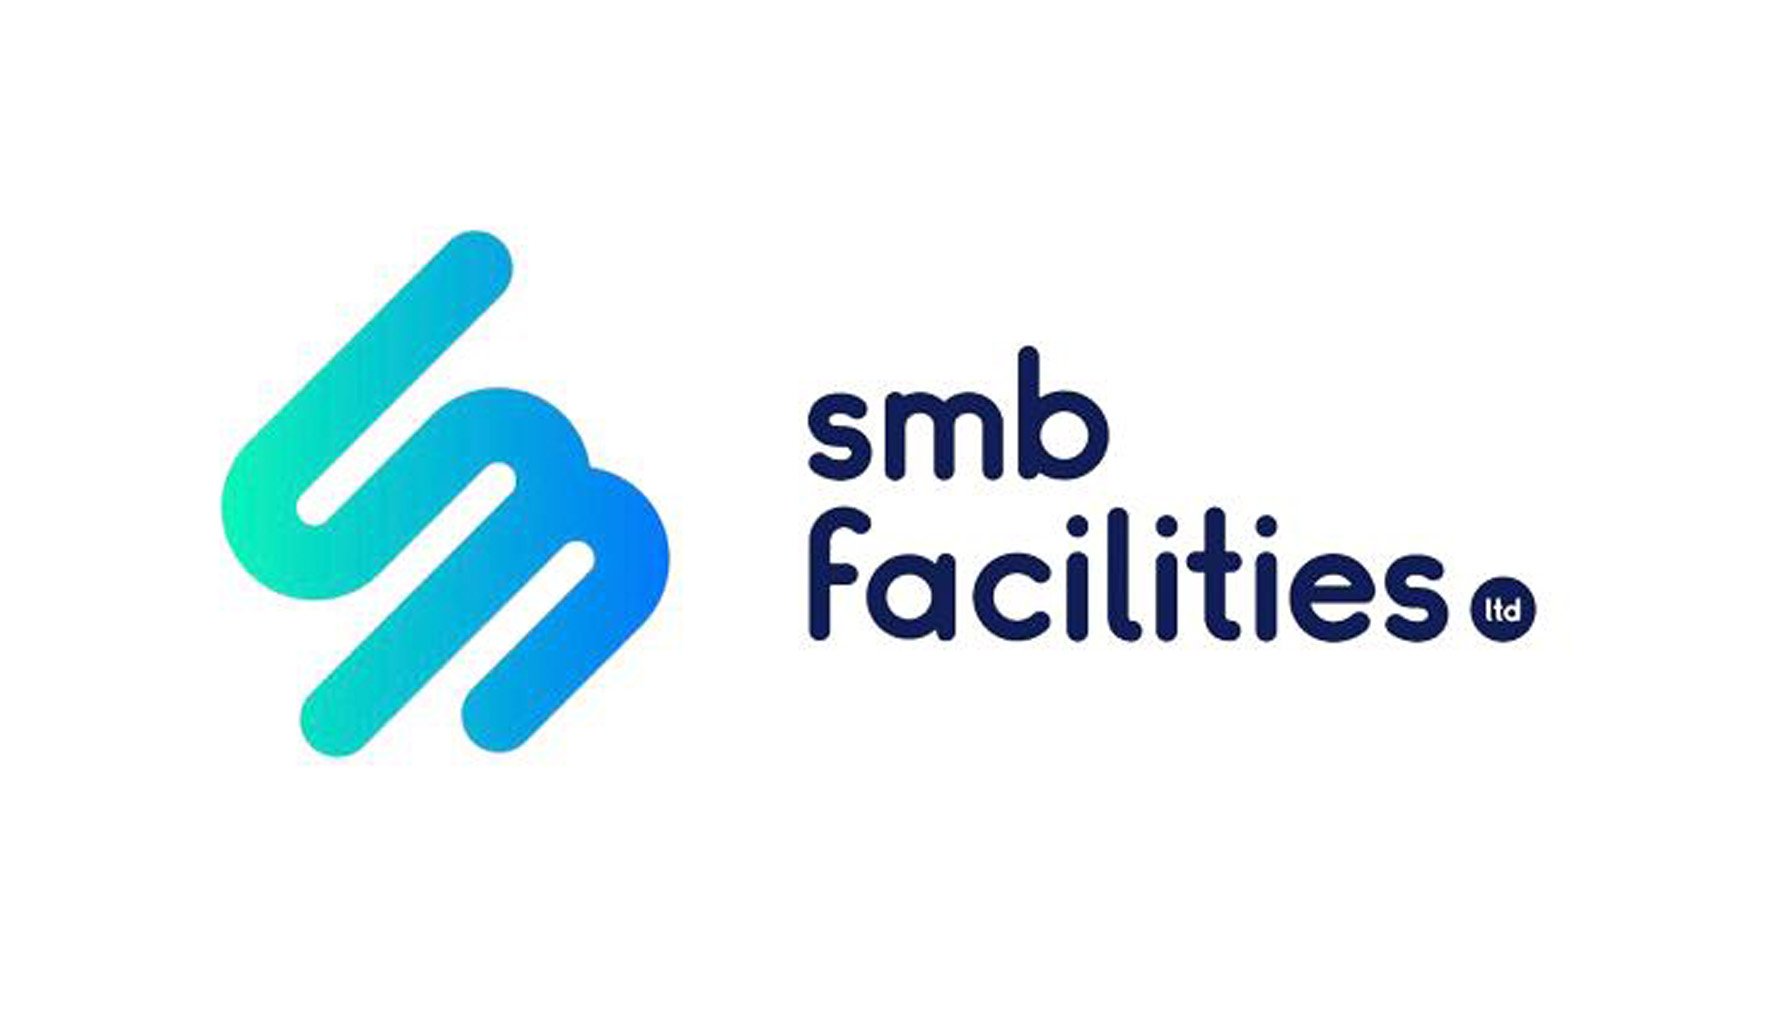 SMB Facilities Ltd